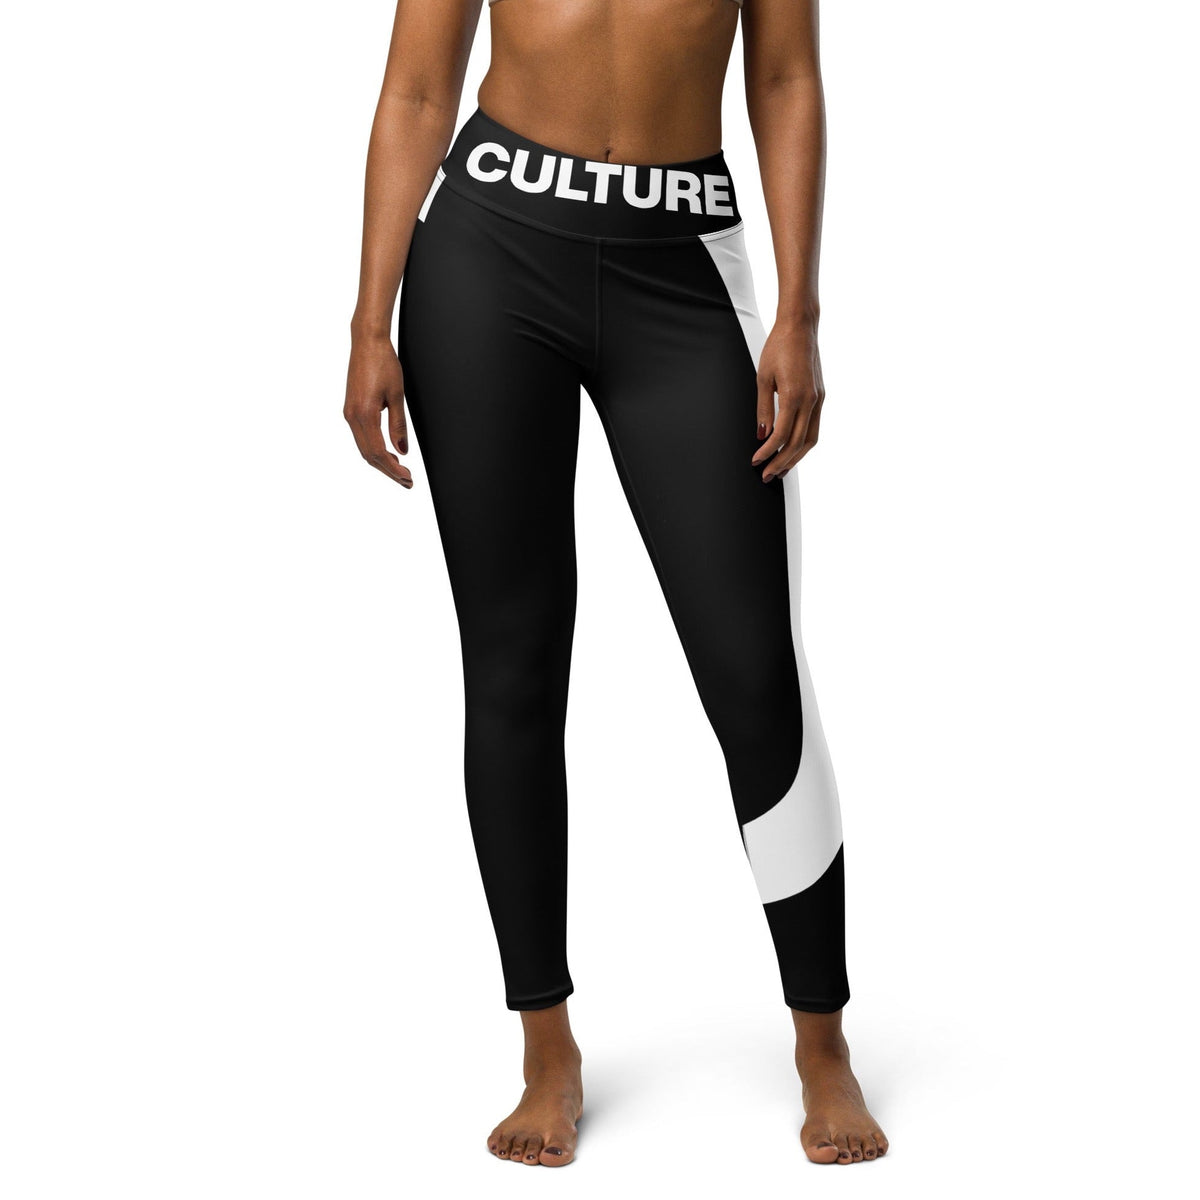 Block Culture Yoga Leggings - For The Culture Clothing Inc.